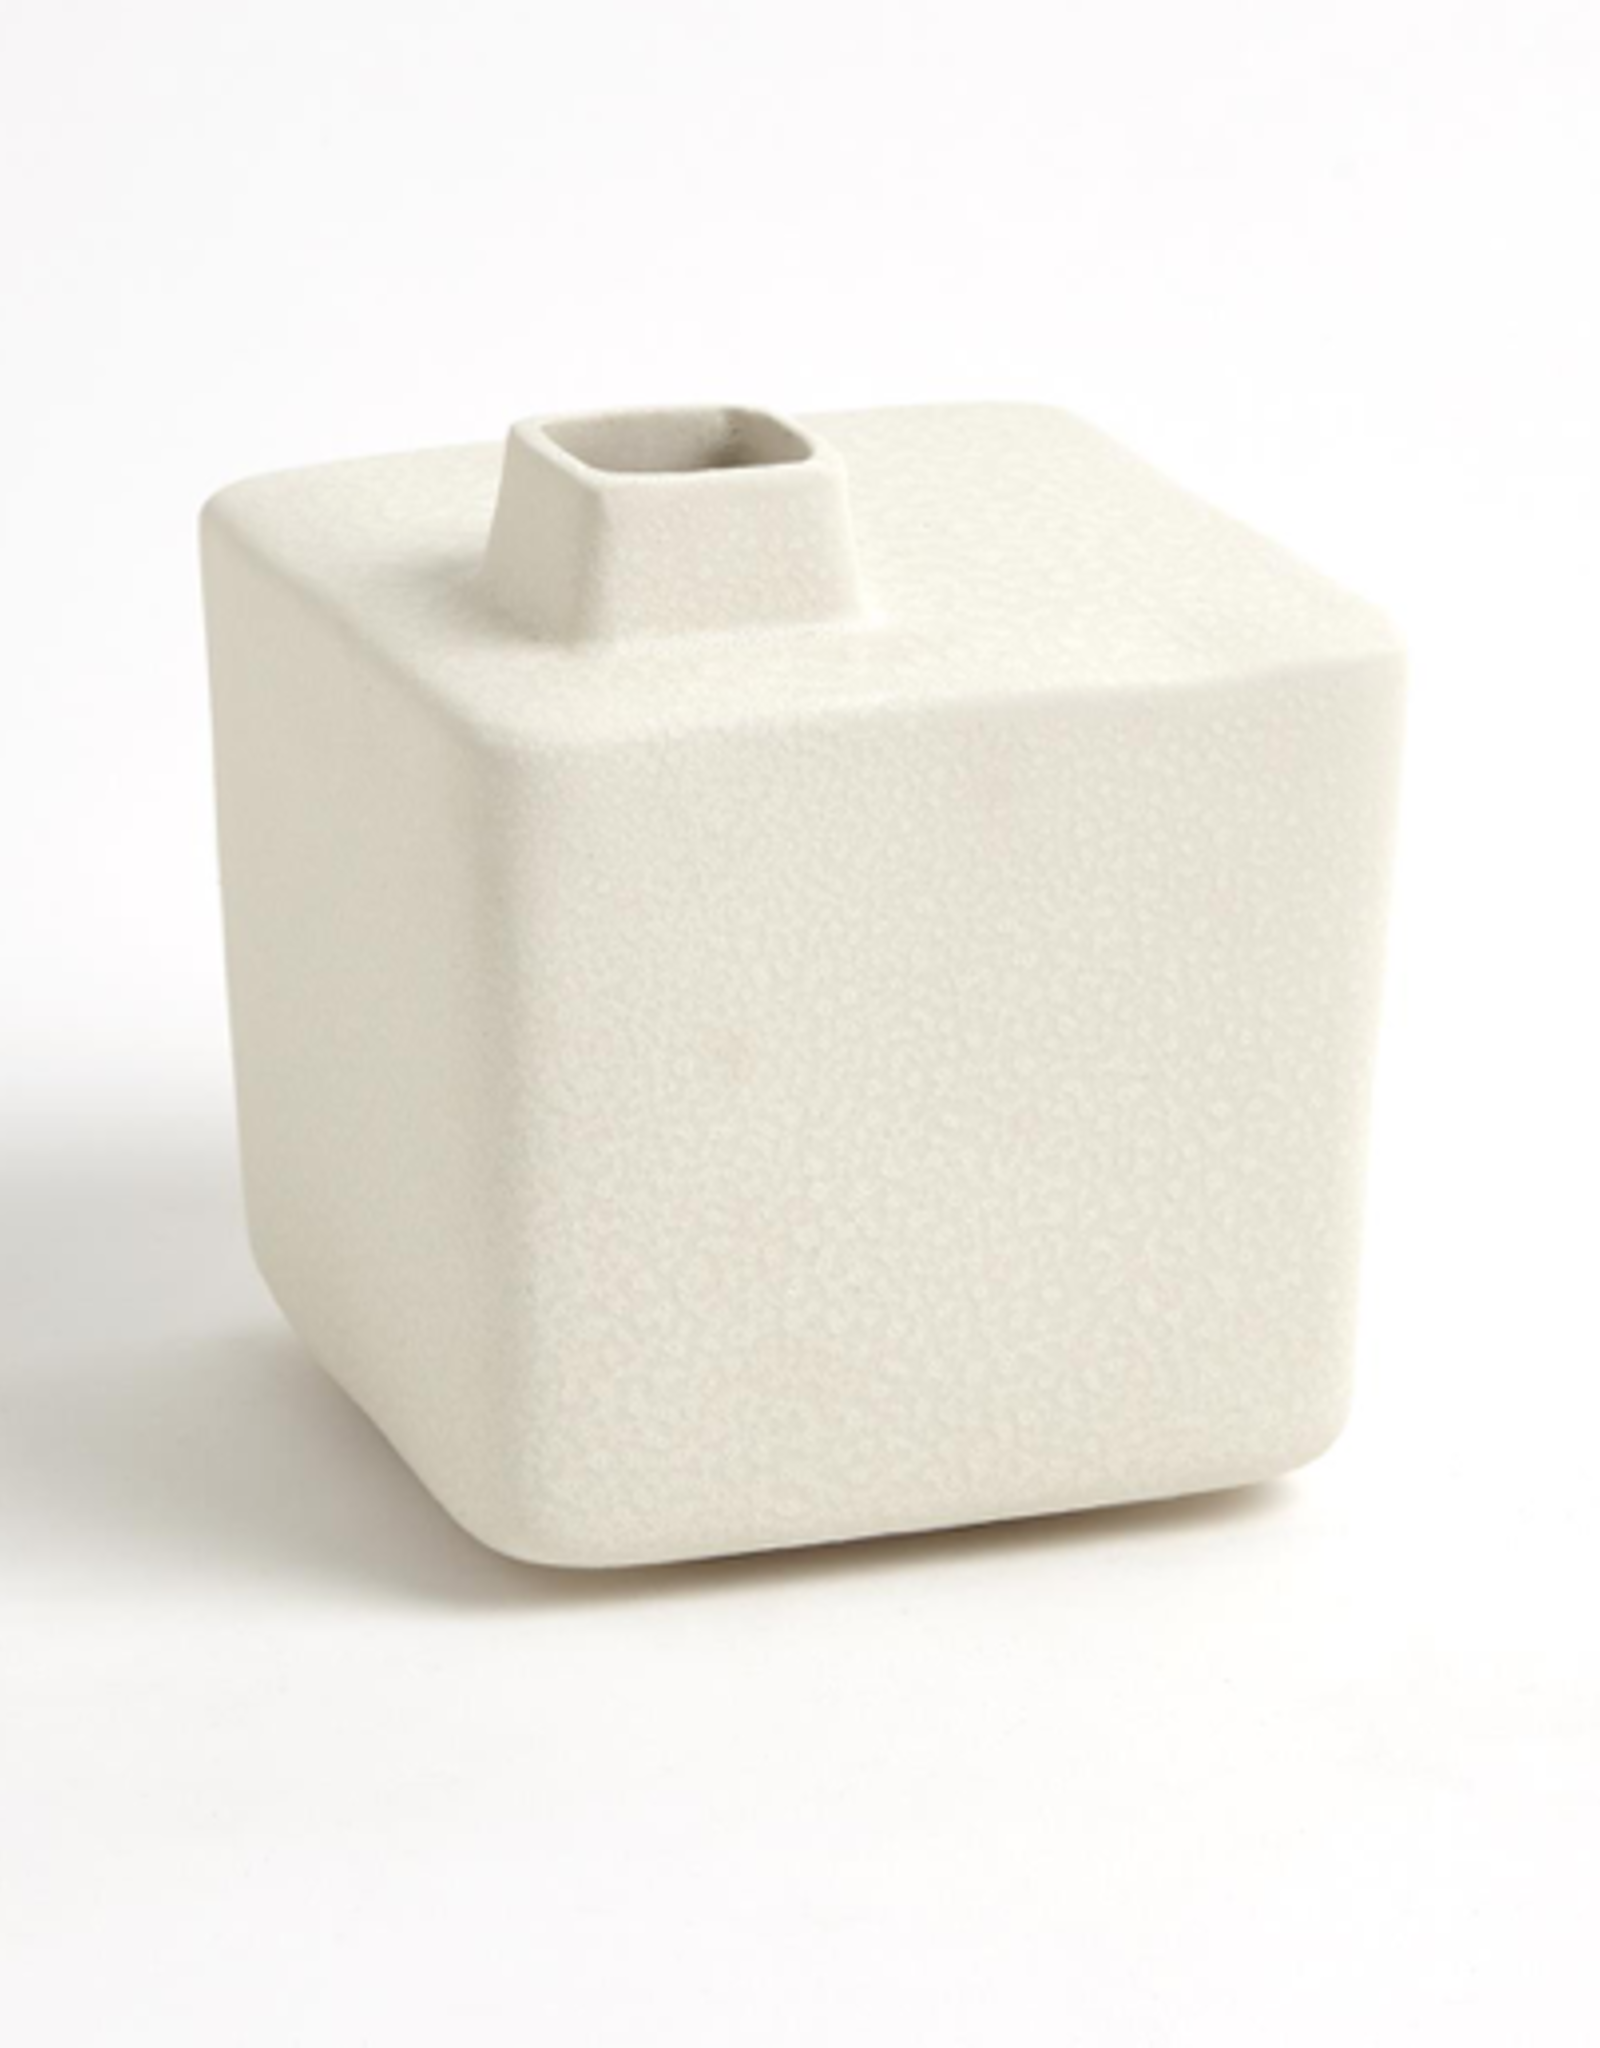 Small White Square Chimney Vase H5.75"